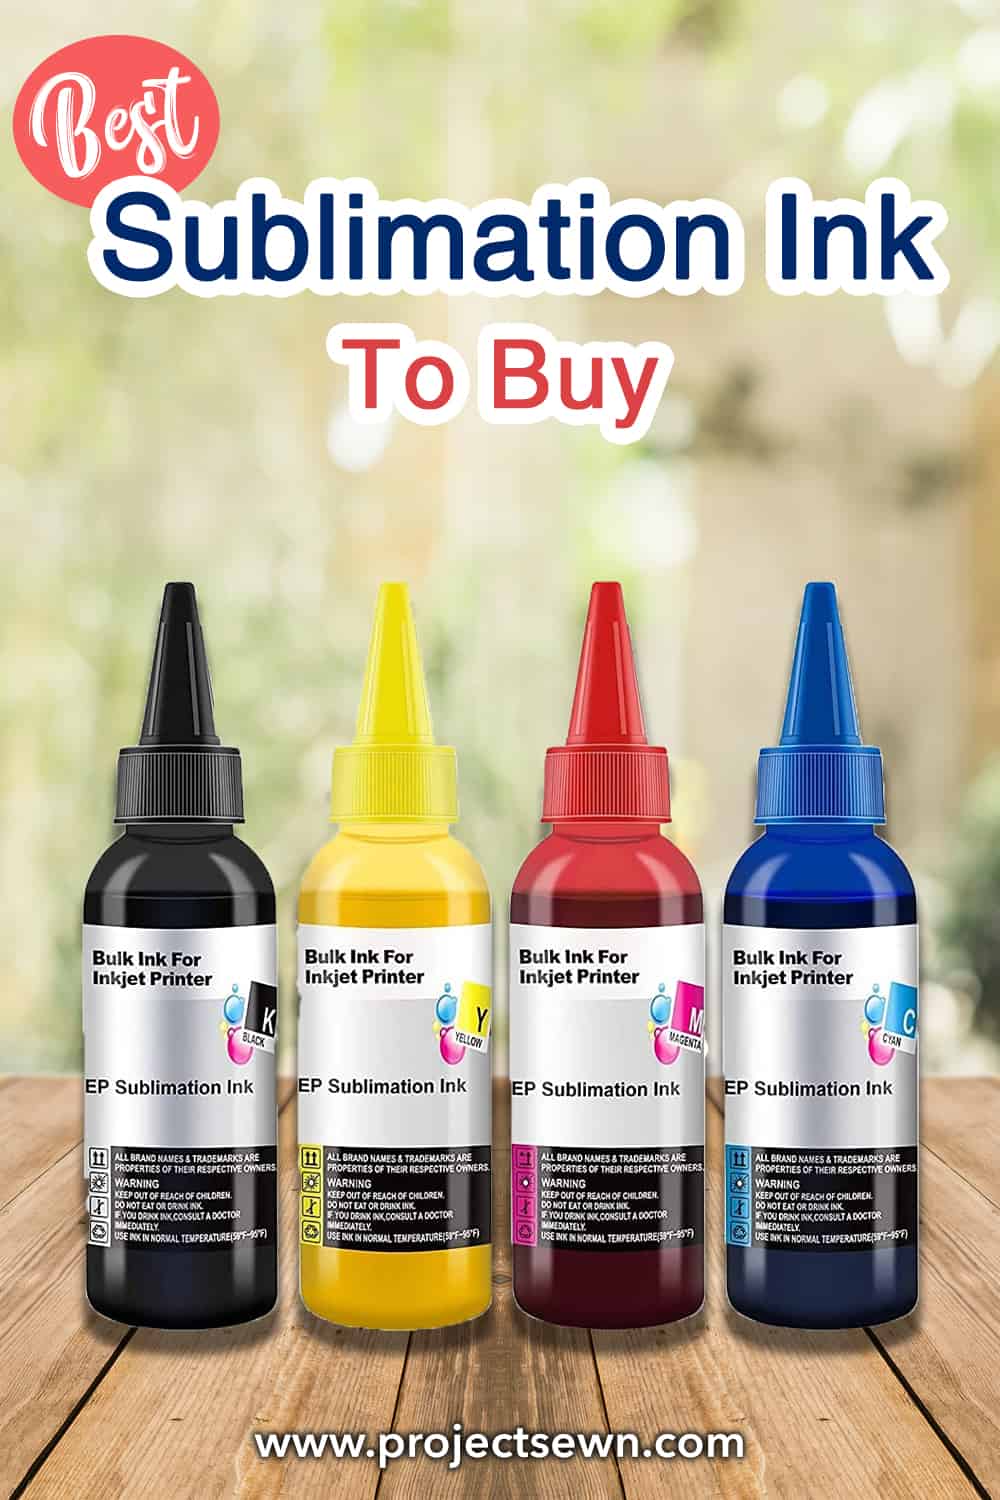 Best Sublimation Ink